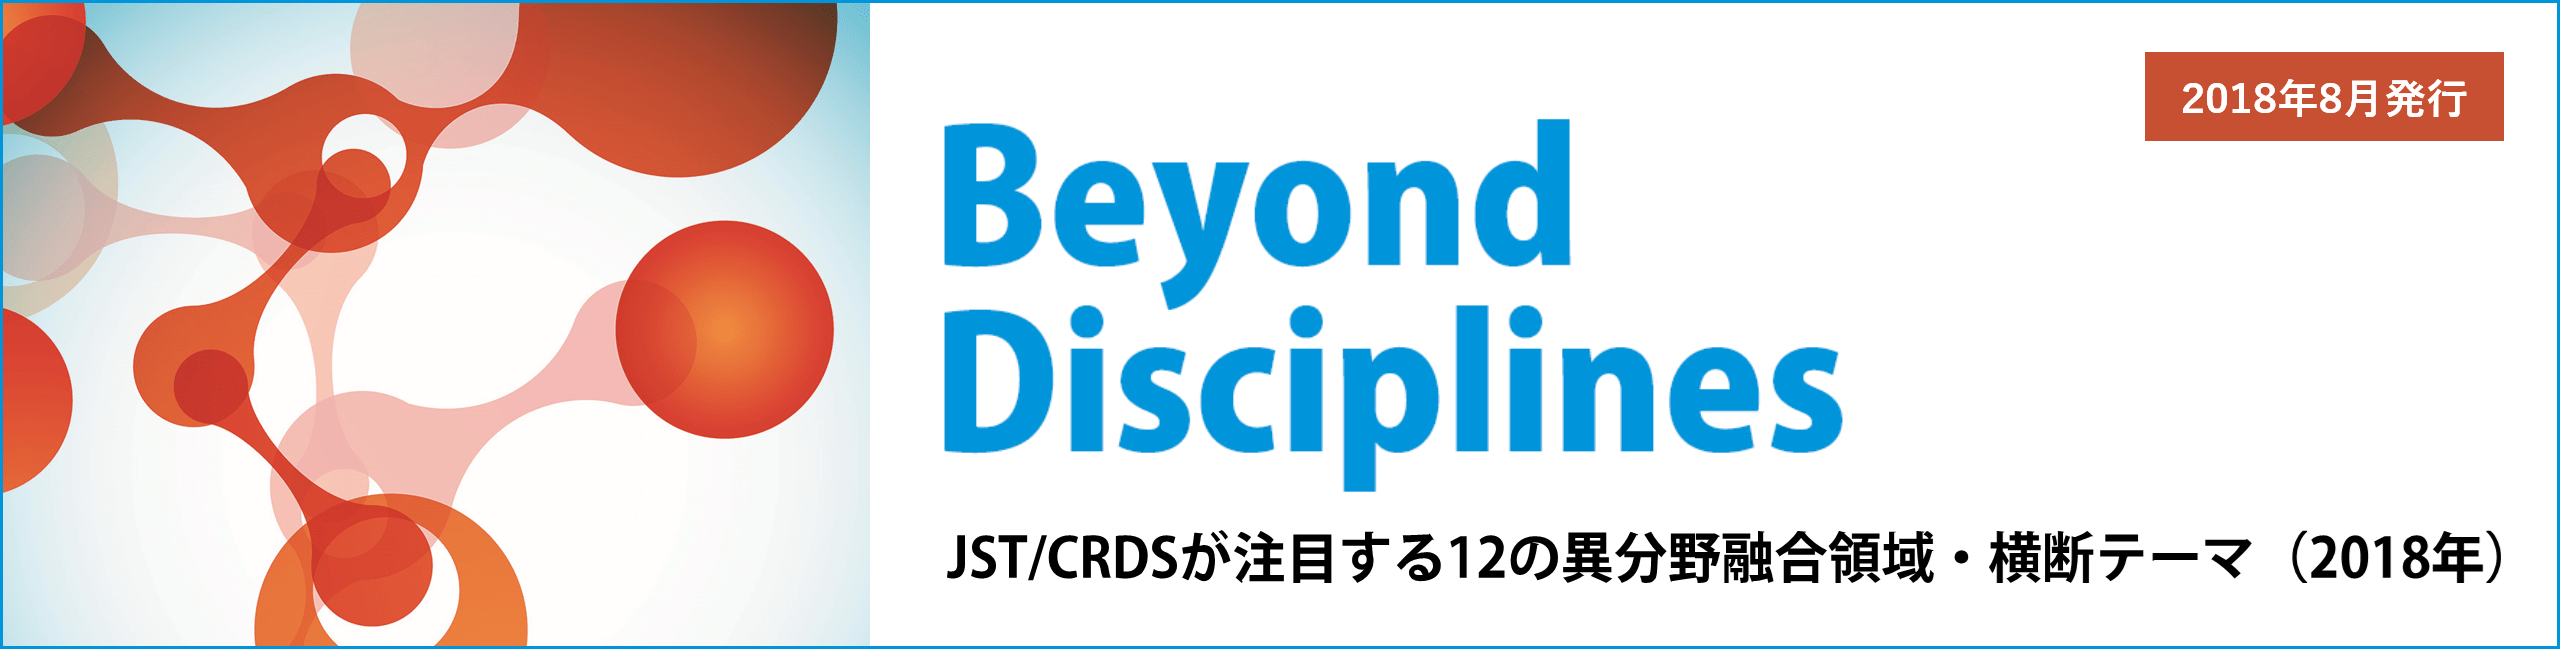 Beyond Disciplines